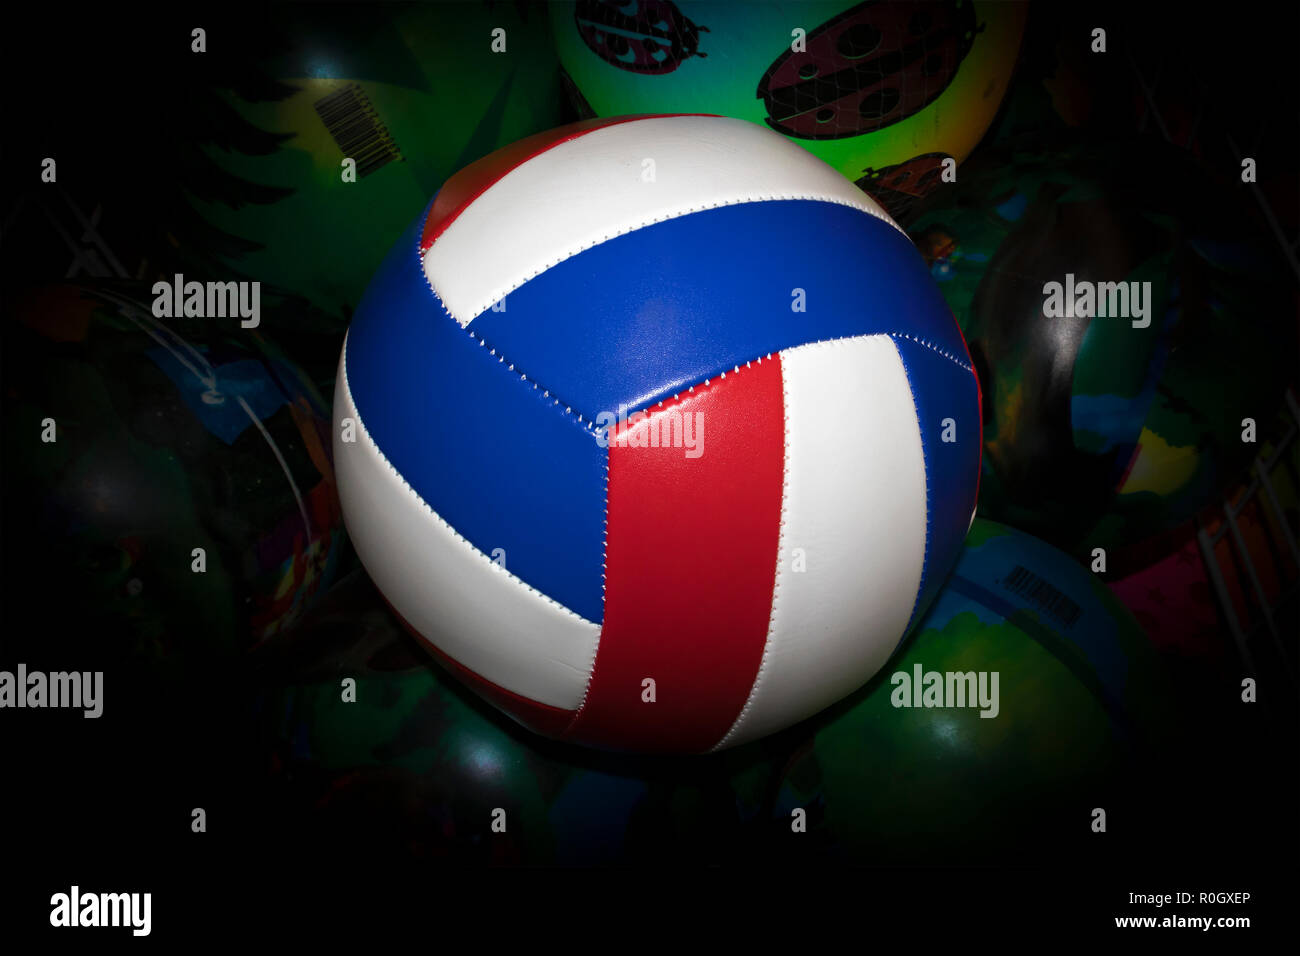 Gestreift volleyball Ball gegen grün lackiert Kugeln mit dunklen Vignette Stockfoto